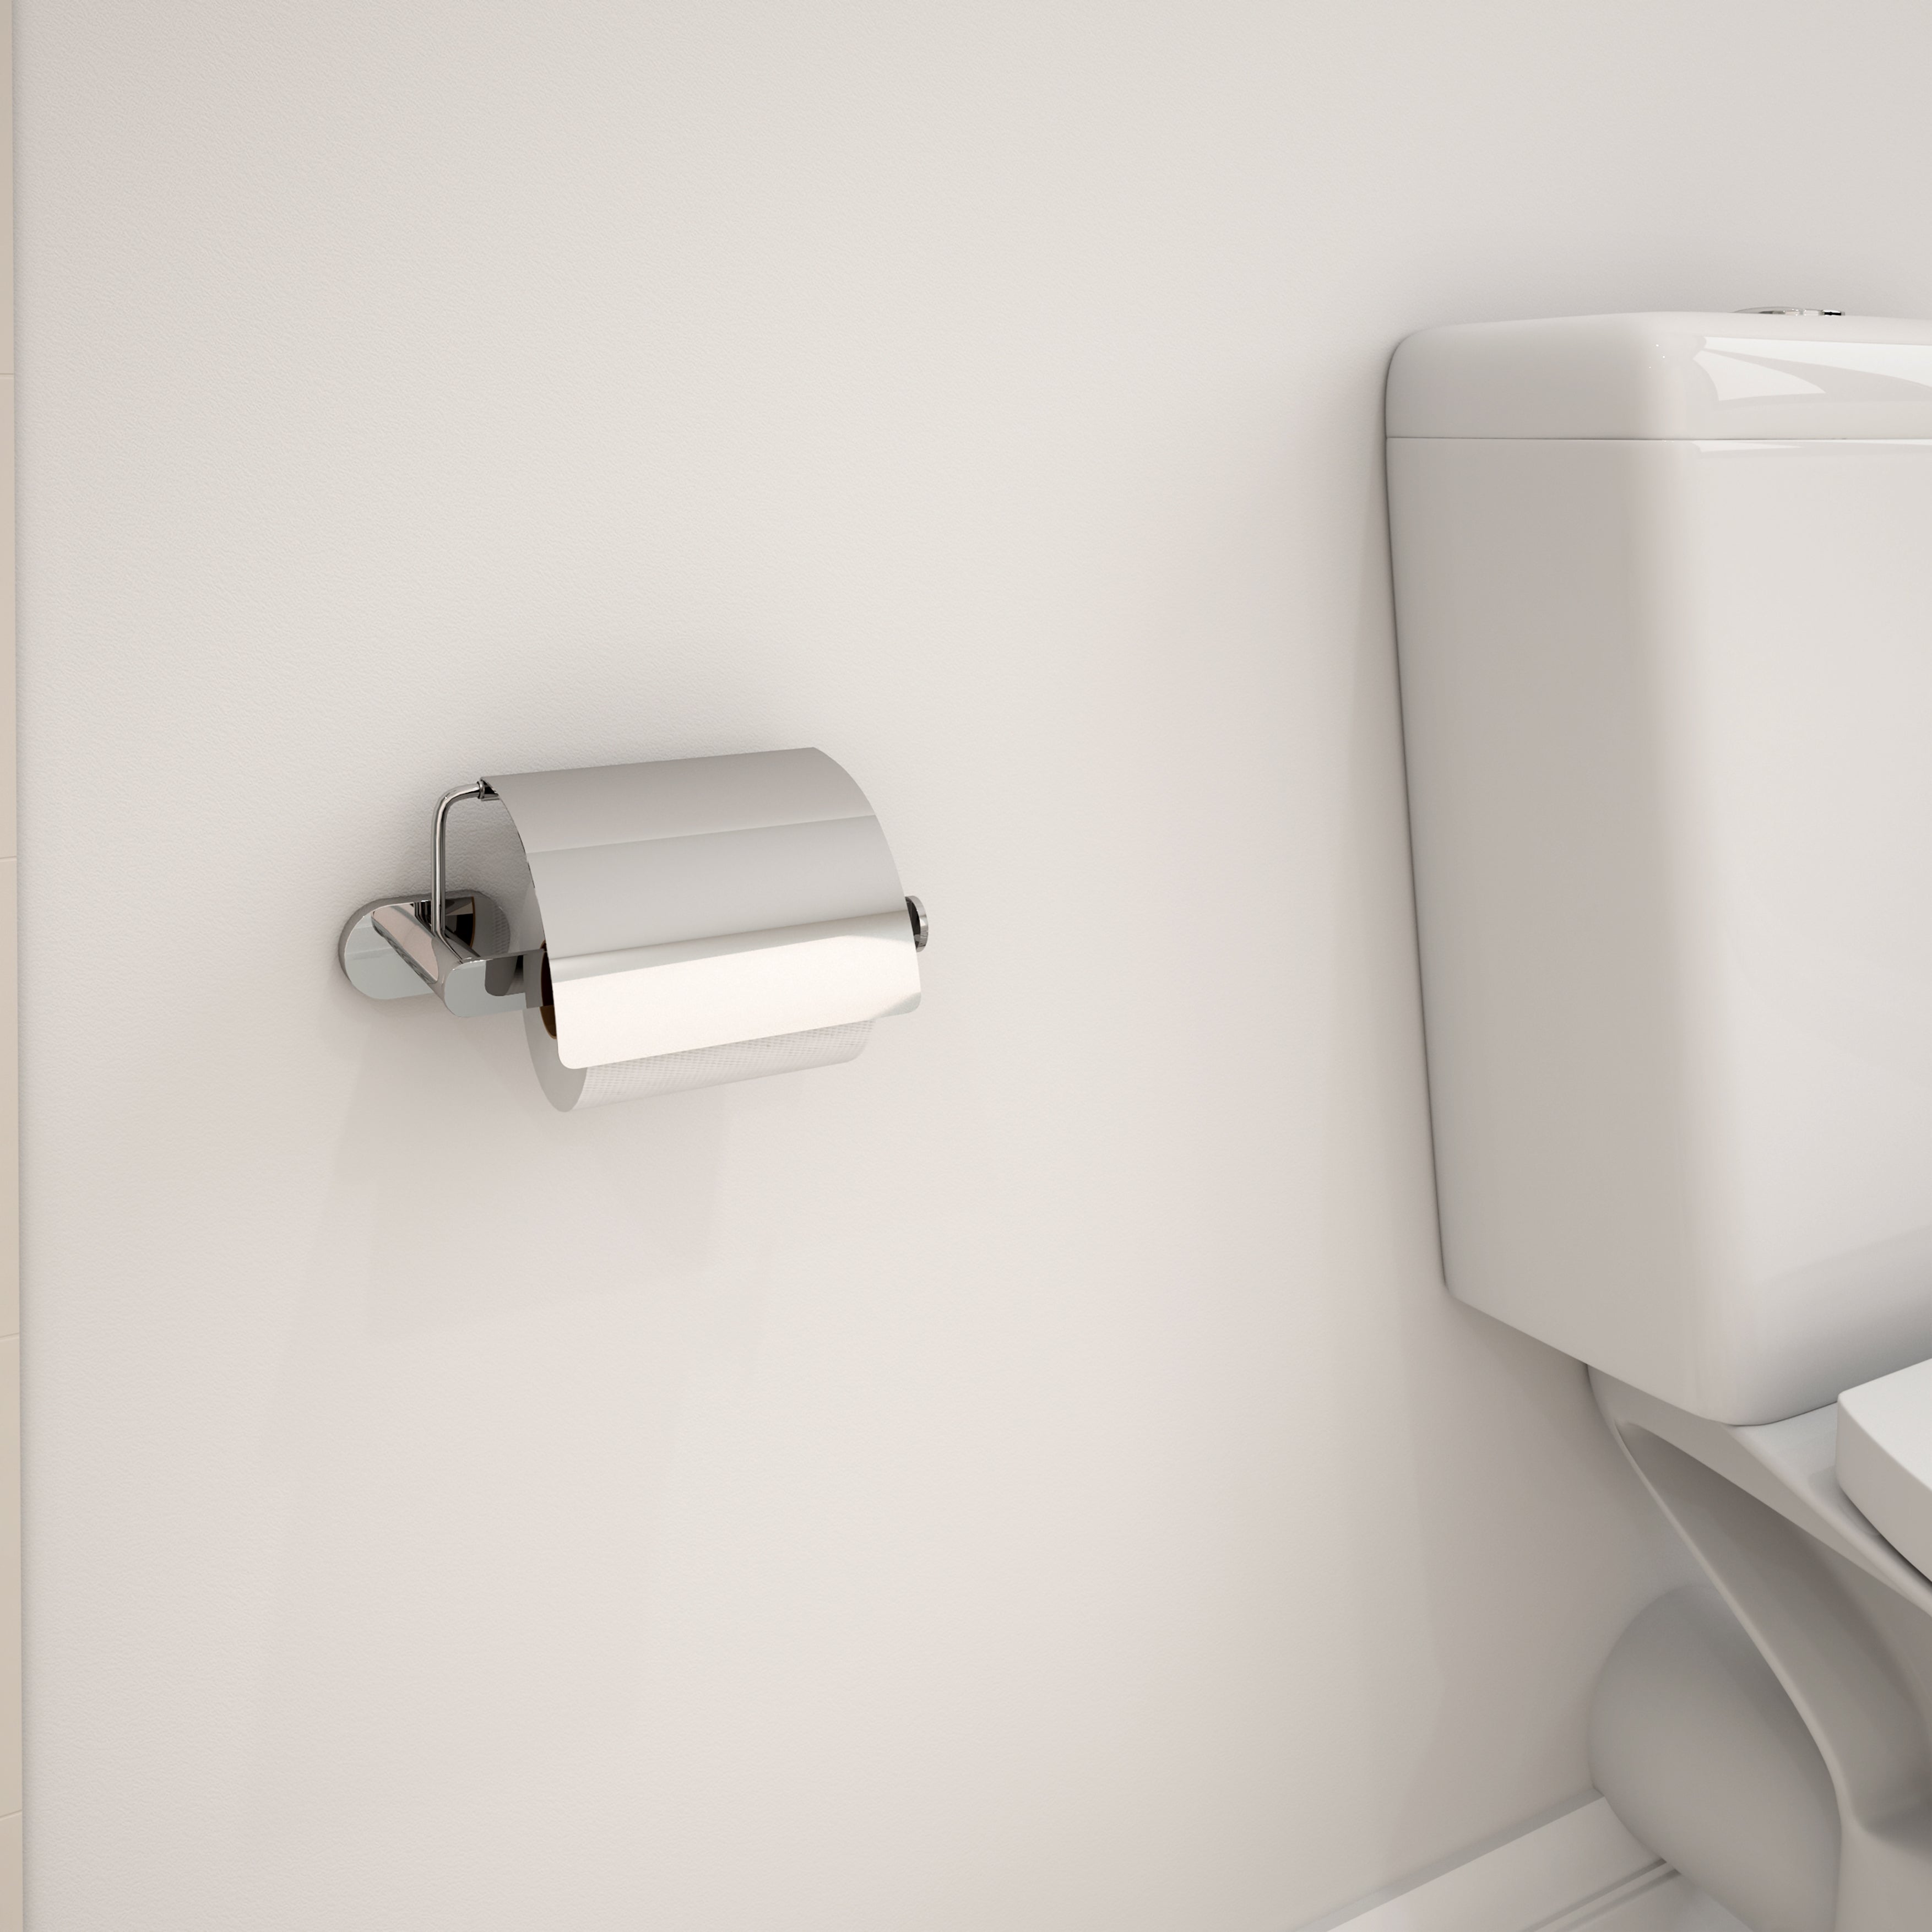 Aria 4-piece Bathroom Accessory Set in Chrome